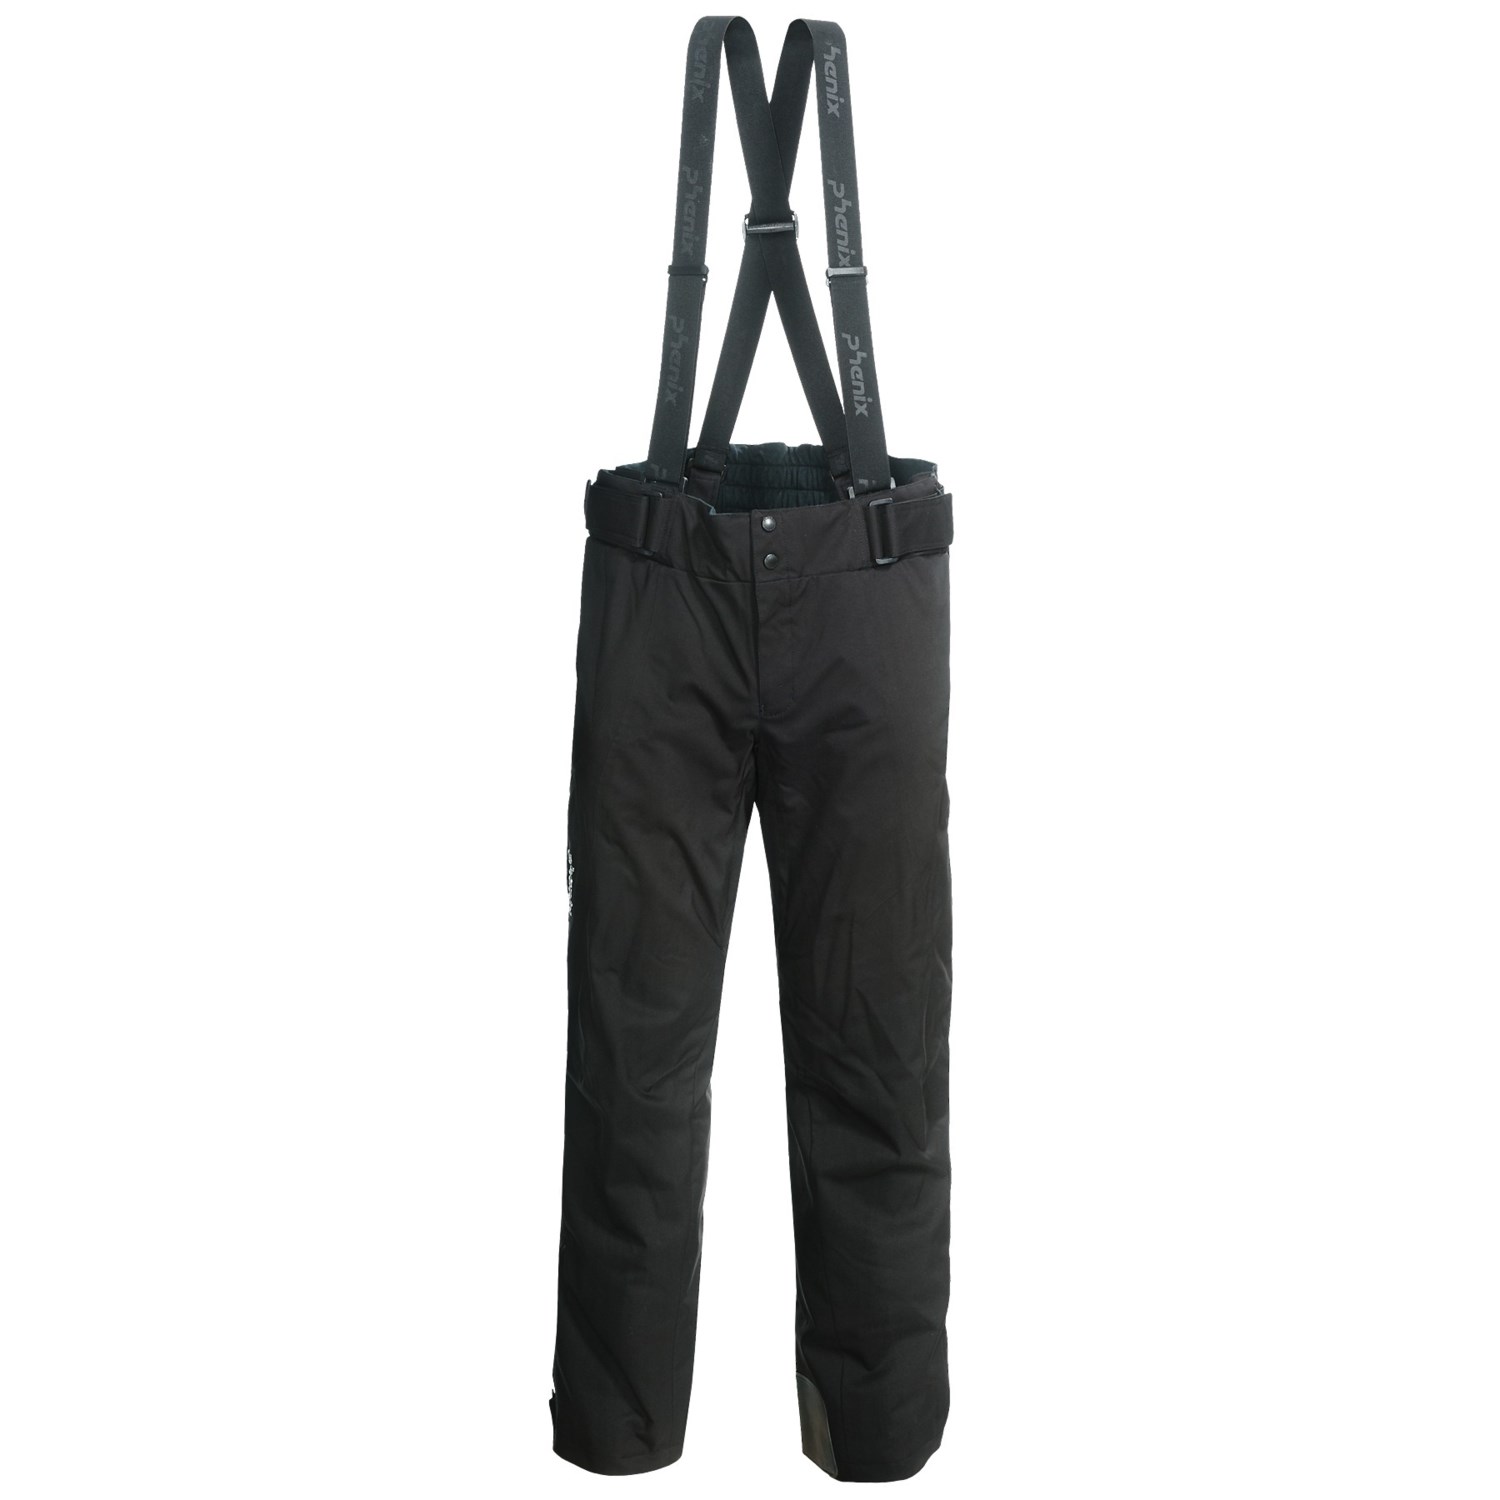 Phenix III Salopette Ski Pants (For Men) 4878W 30